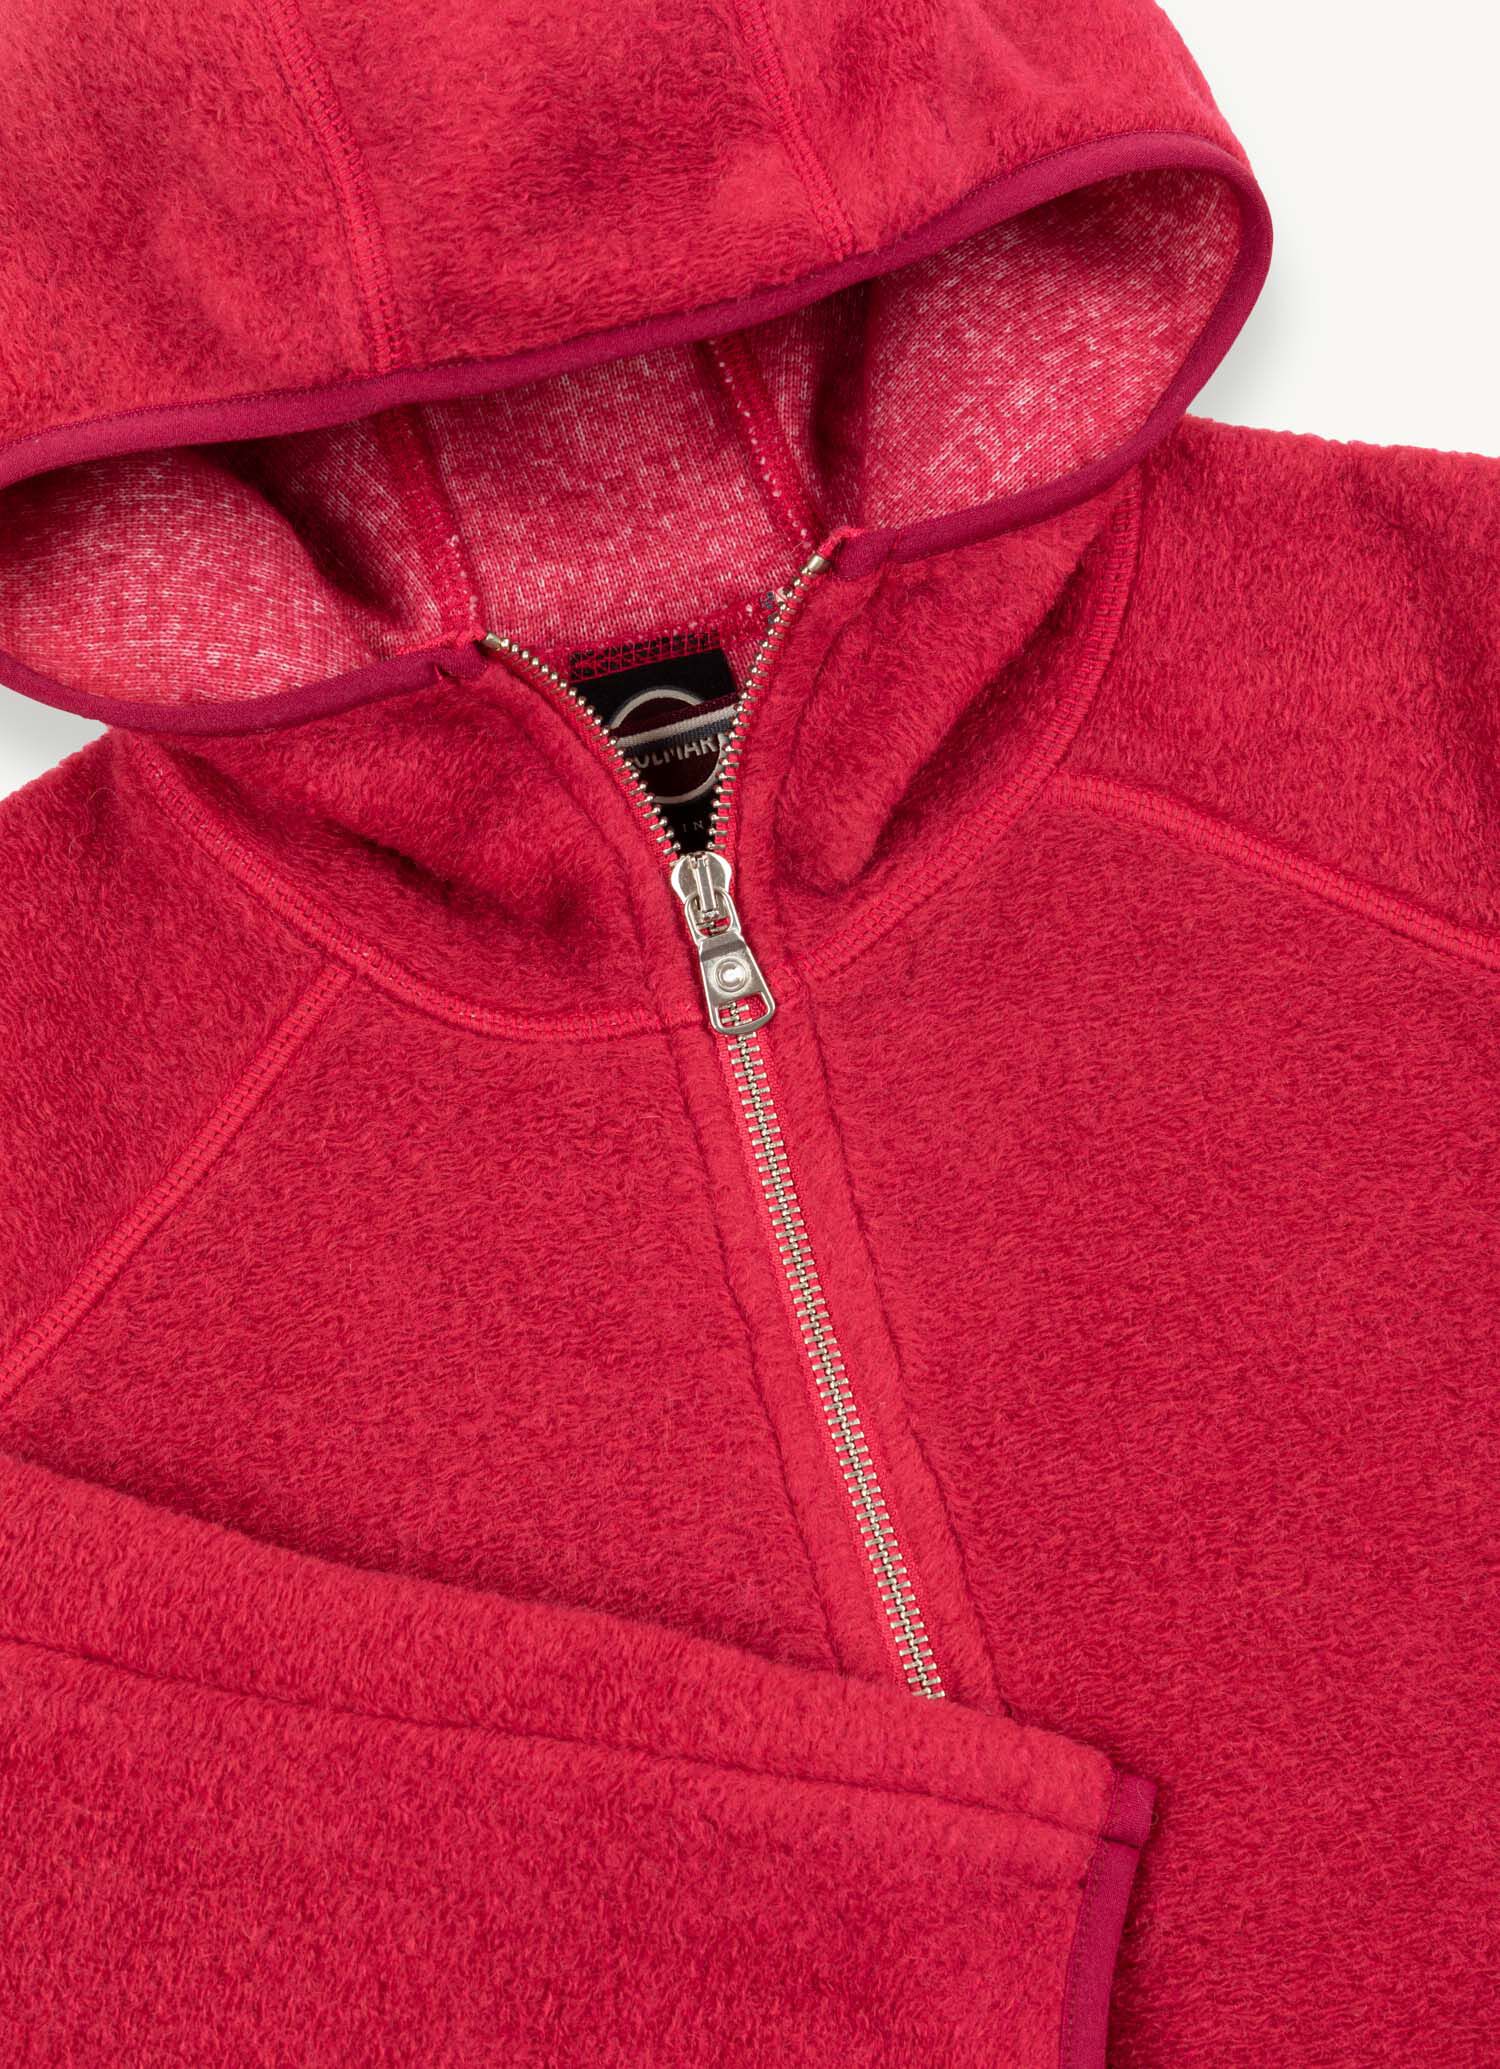 Rosa S Zara sweatshirt Rabatt 99 % HERREN Pullovers & Sweatshirts Ohne Kapuze 